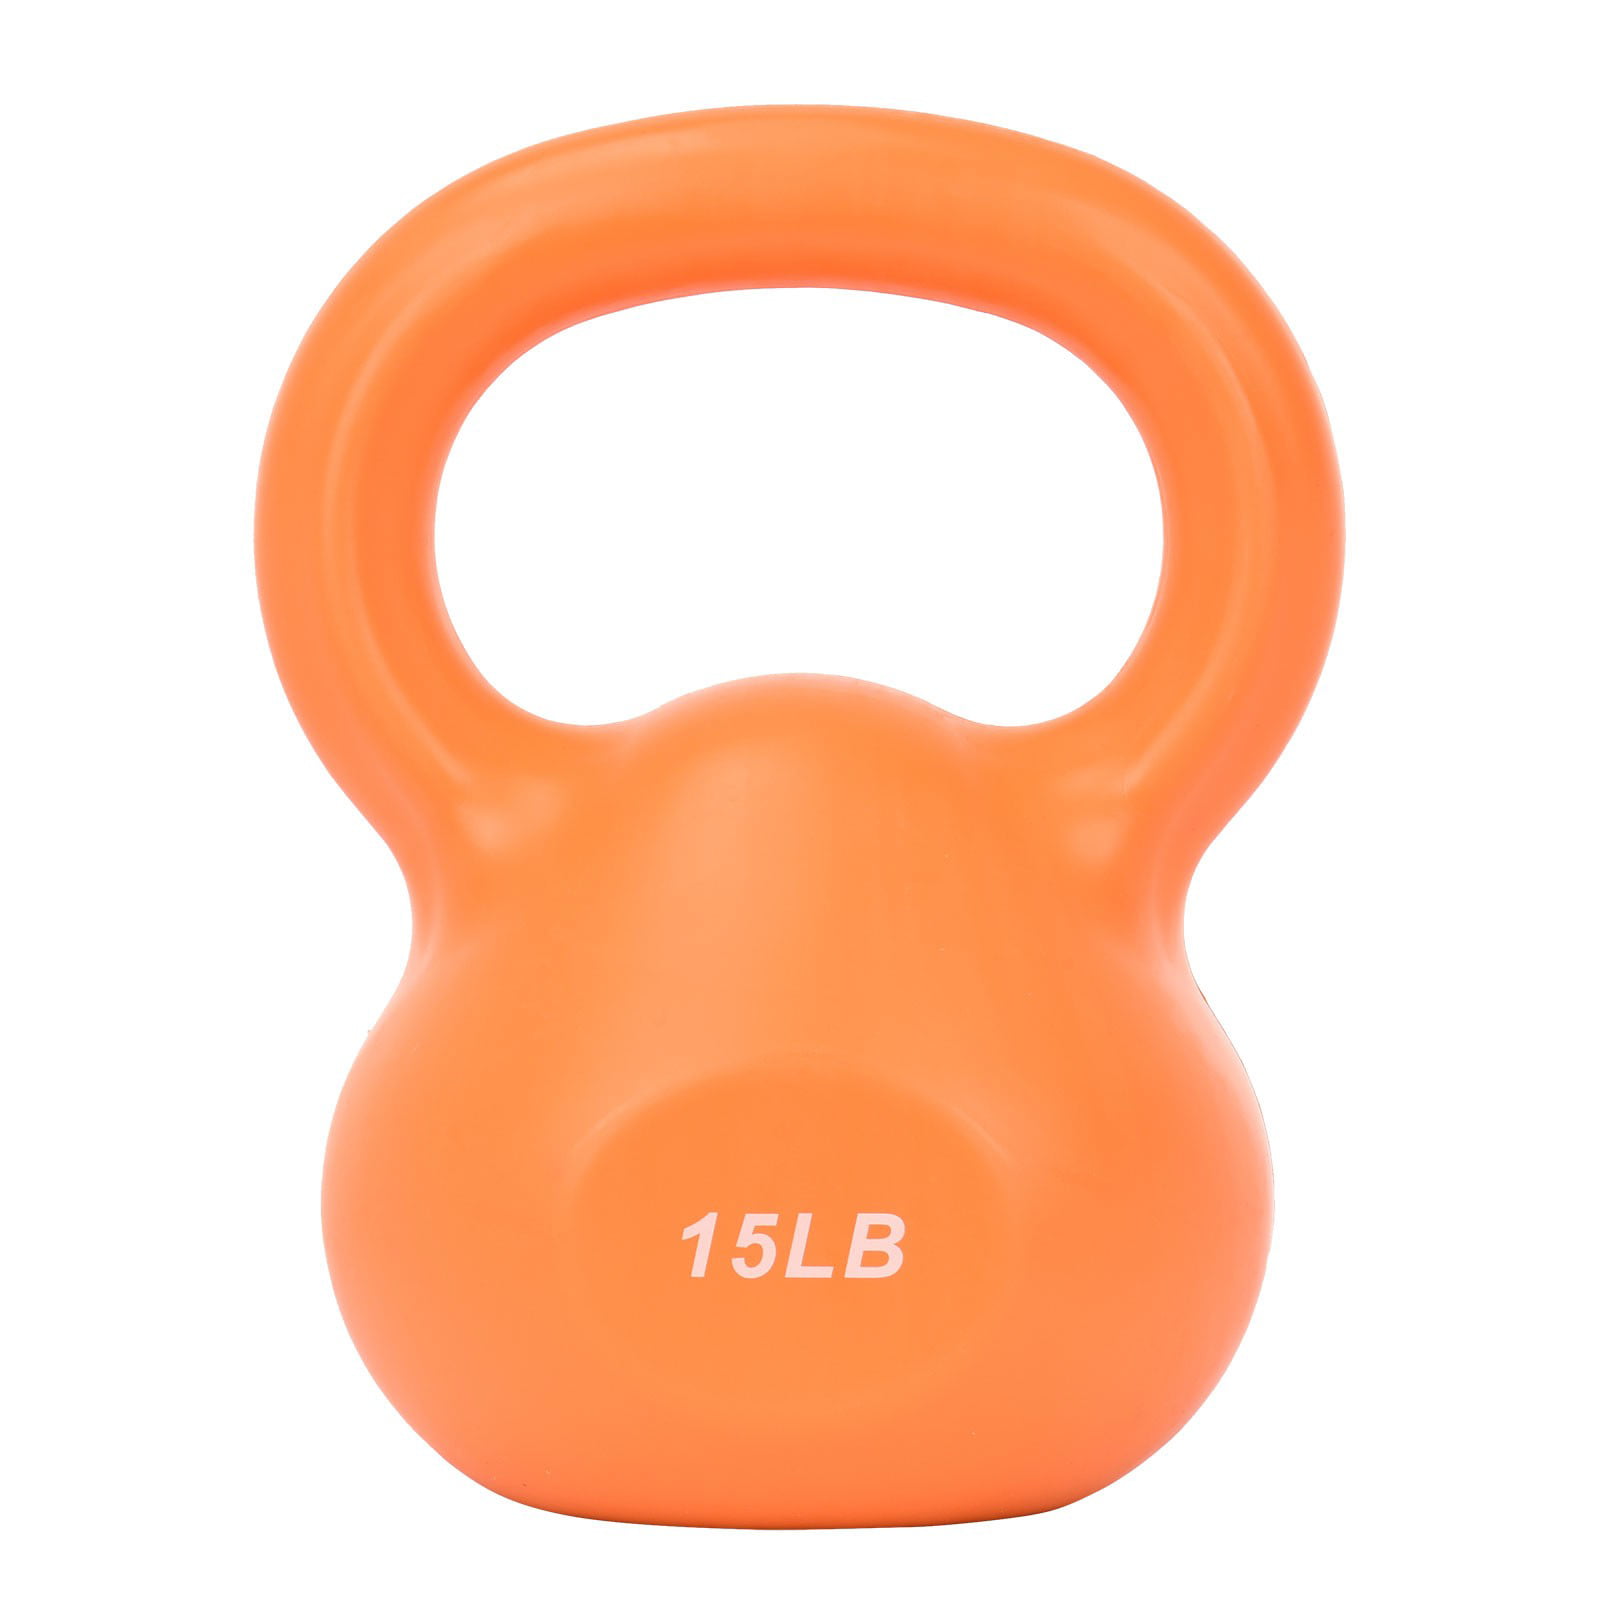 Strength Training Equipment for Women/Men Workout HU14CH Kettlebell Weight For Home Gym Home Workouts 5LB-20LB Kettle Bell Weight 4 Weight Selections